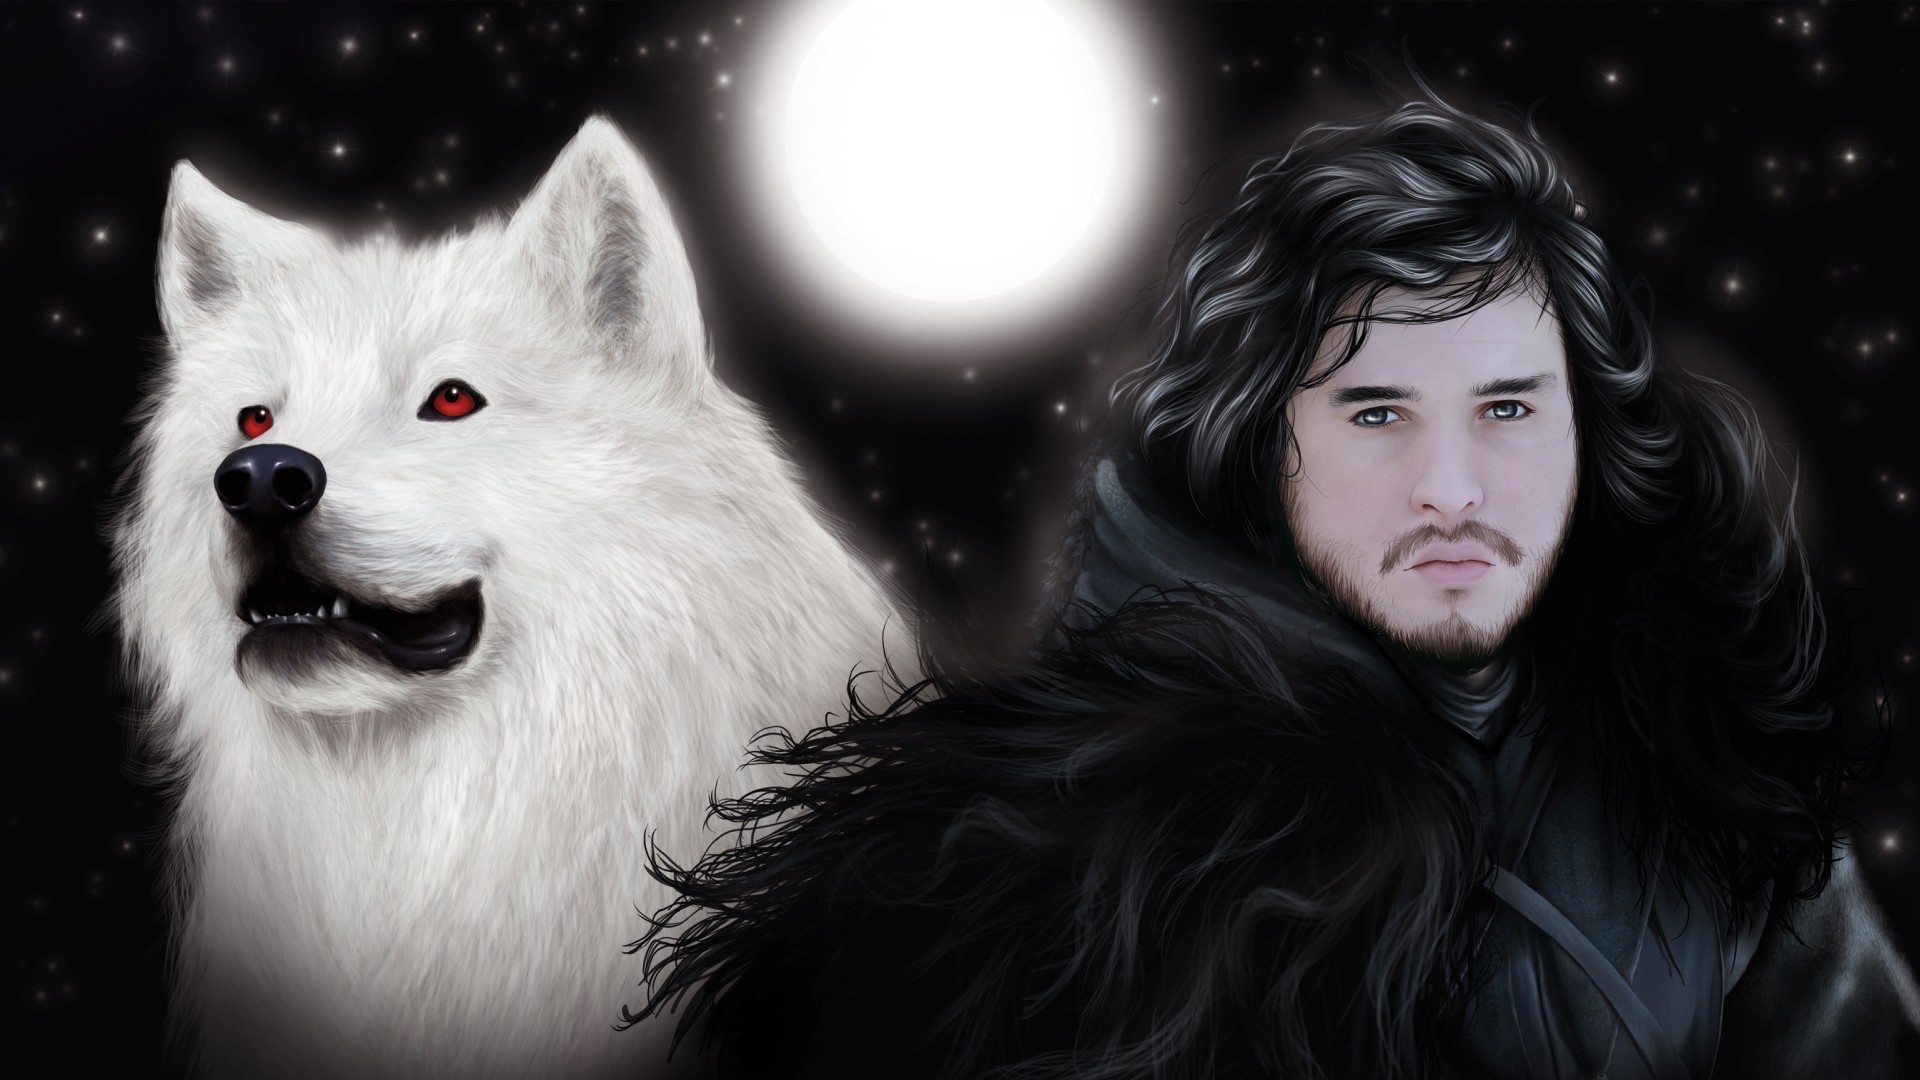 Artwork Game of Thrones Jon Snow wolves wallpaper 1920x1080 218001 1920x1080